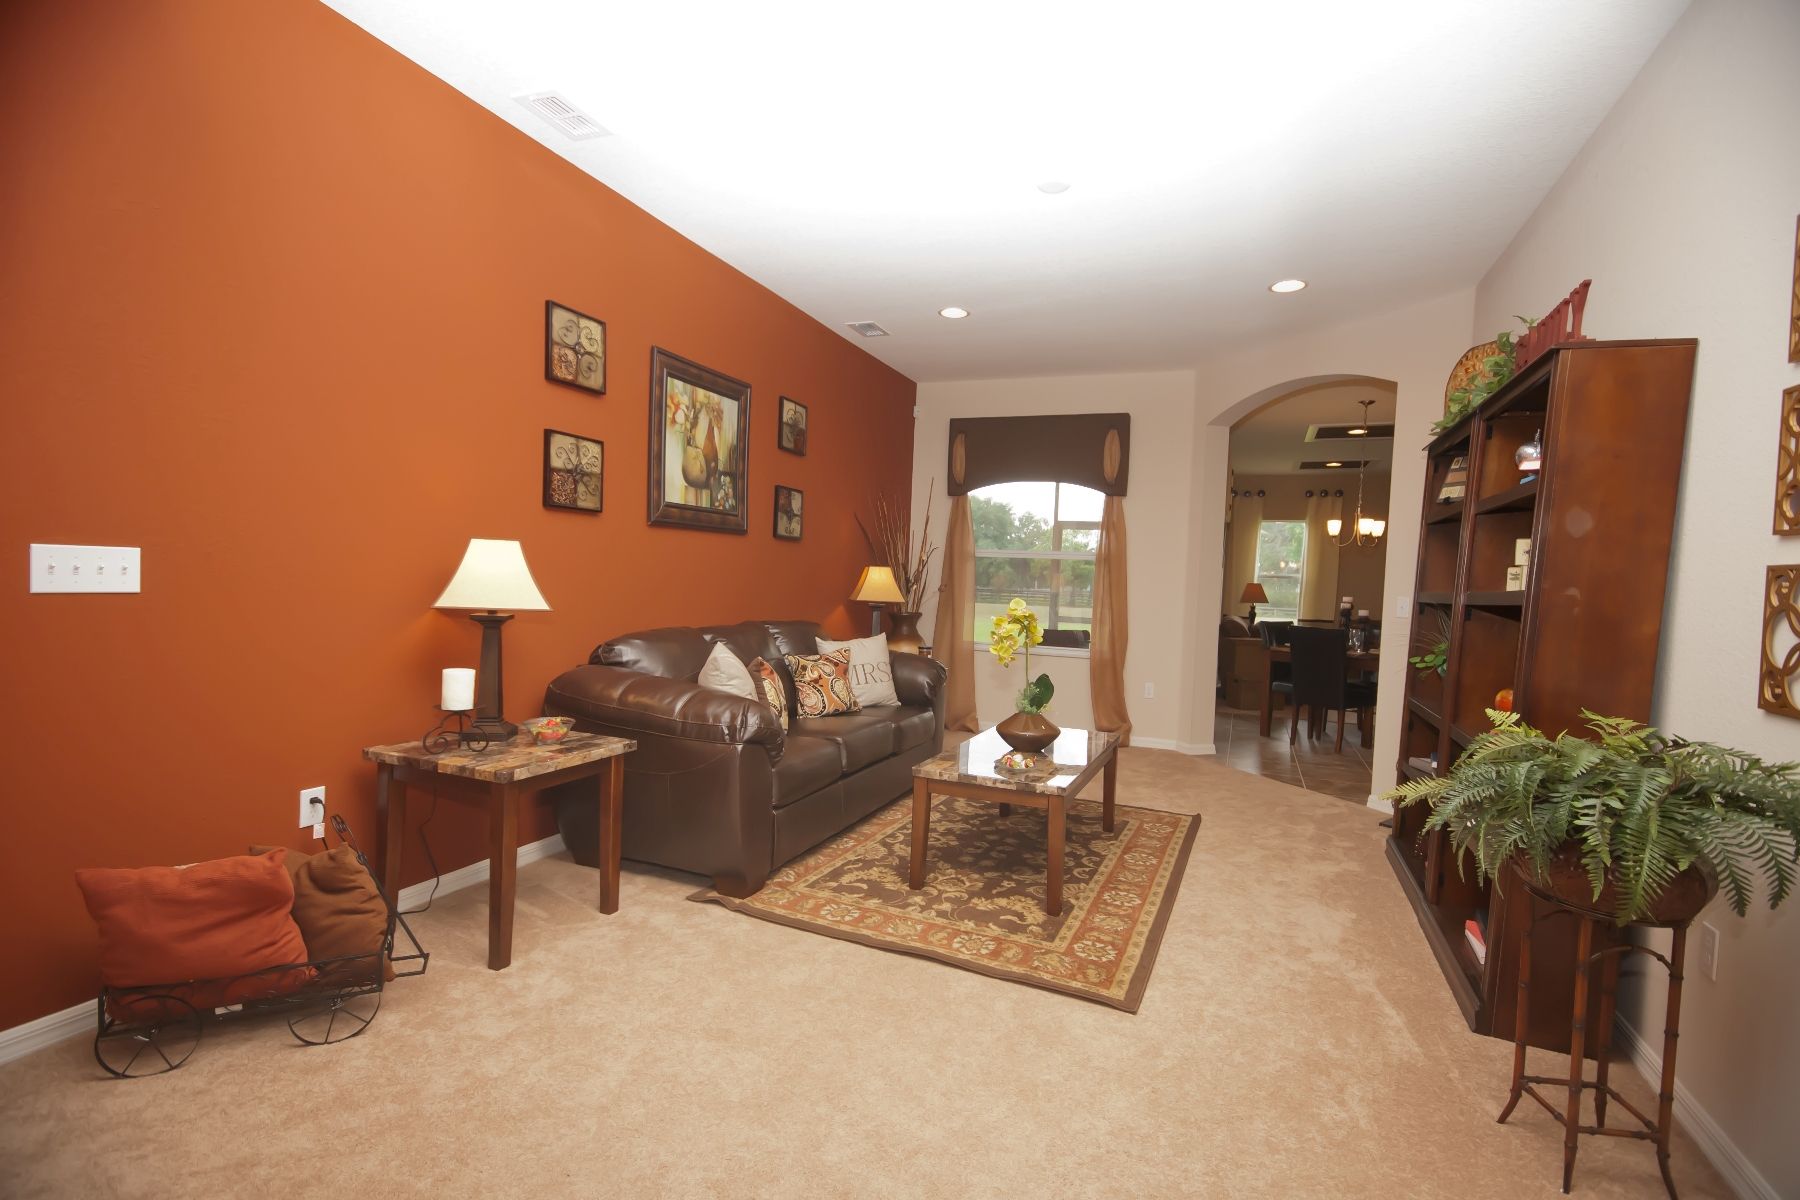 Orange living room walls